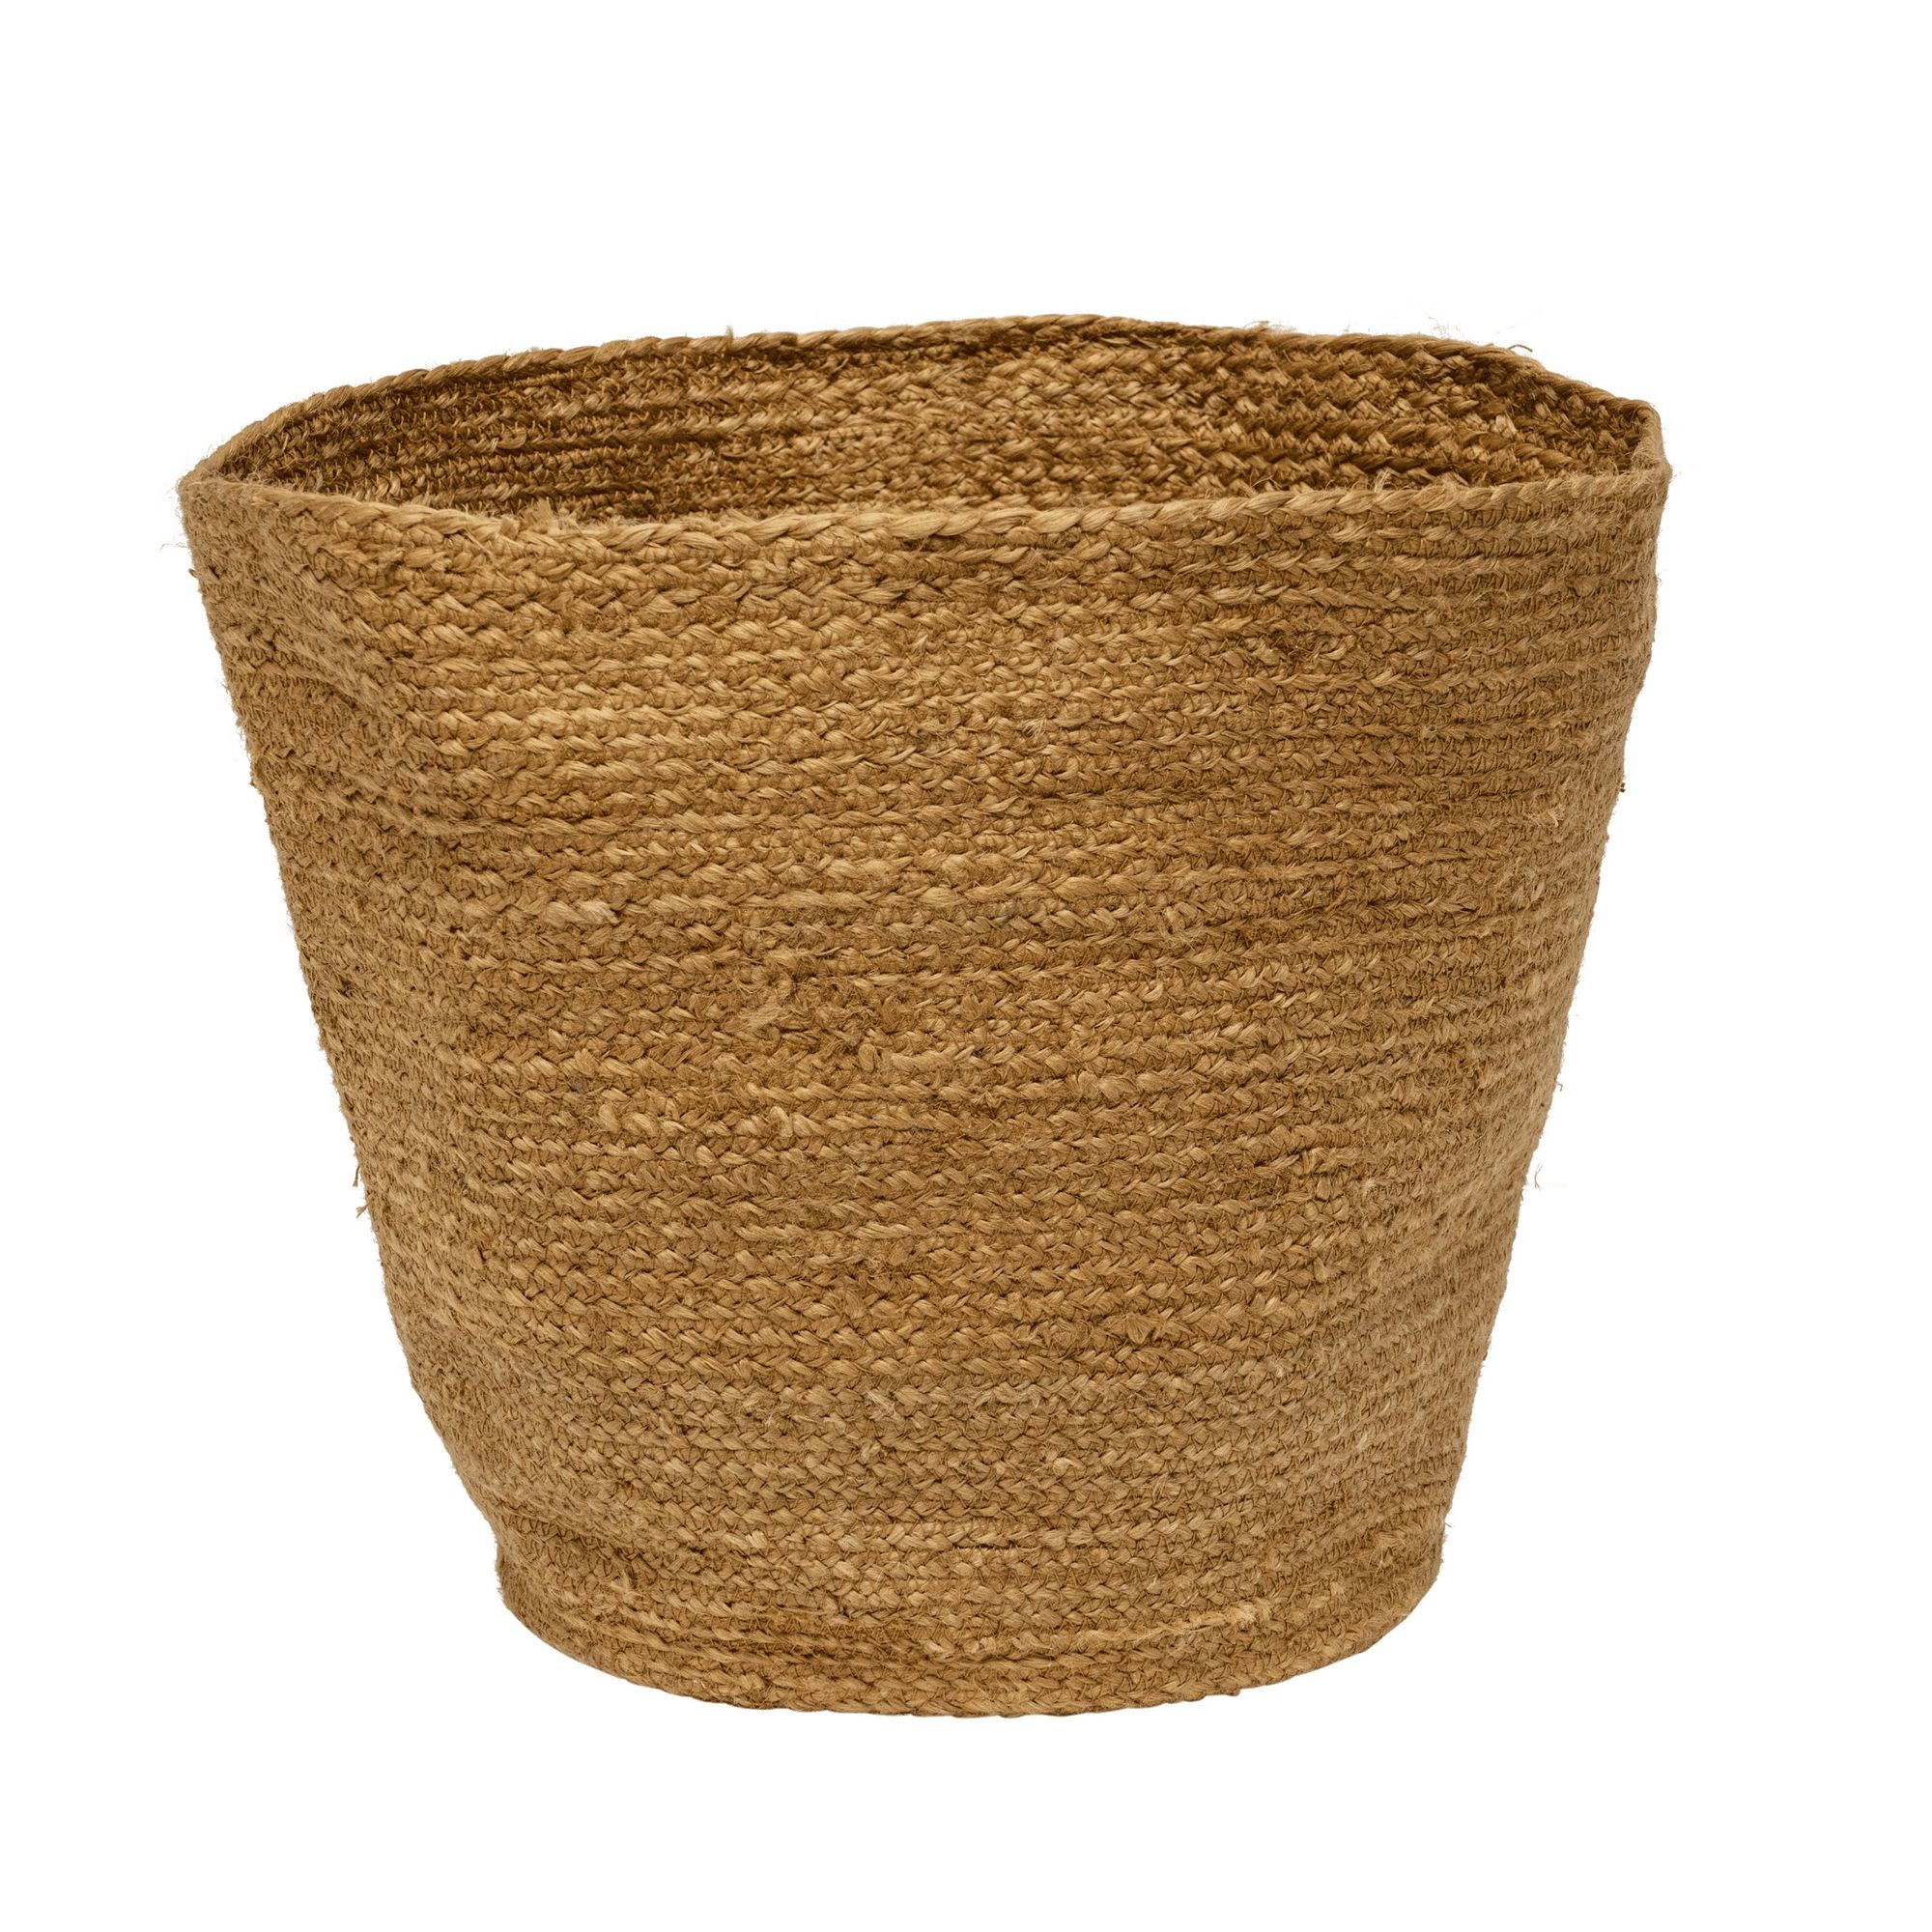 Unc Storage Basket Jute Woodrush Gift